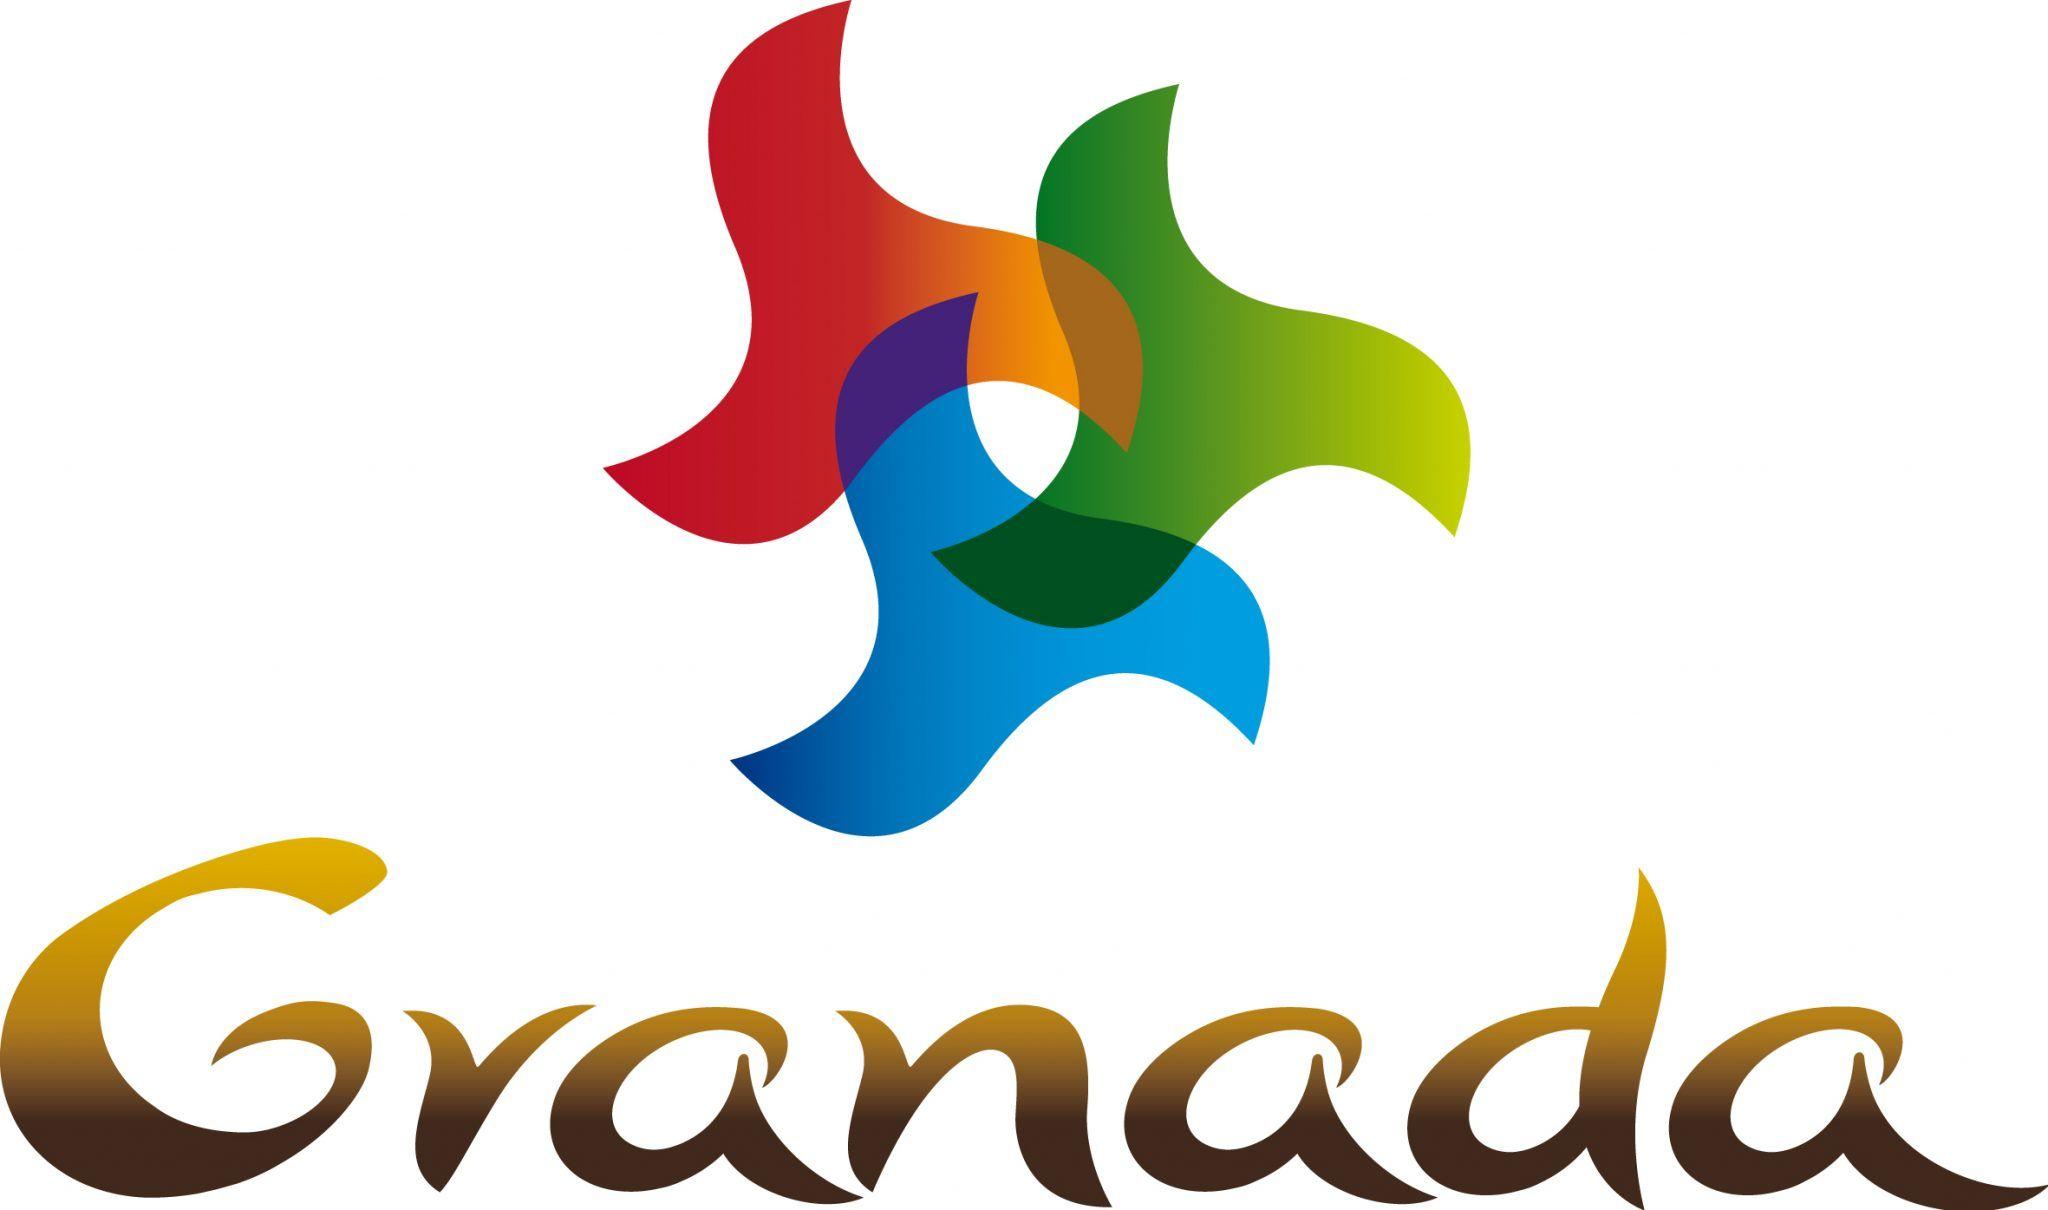 Granada Logo - Granada logo